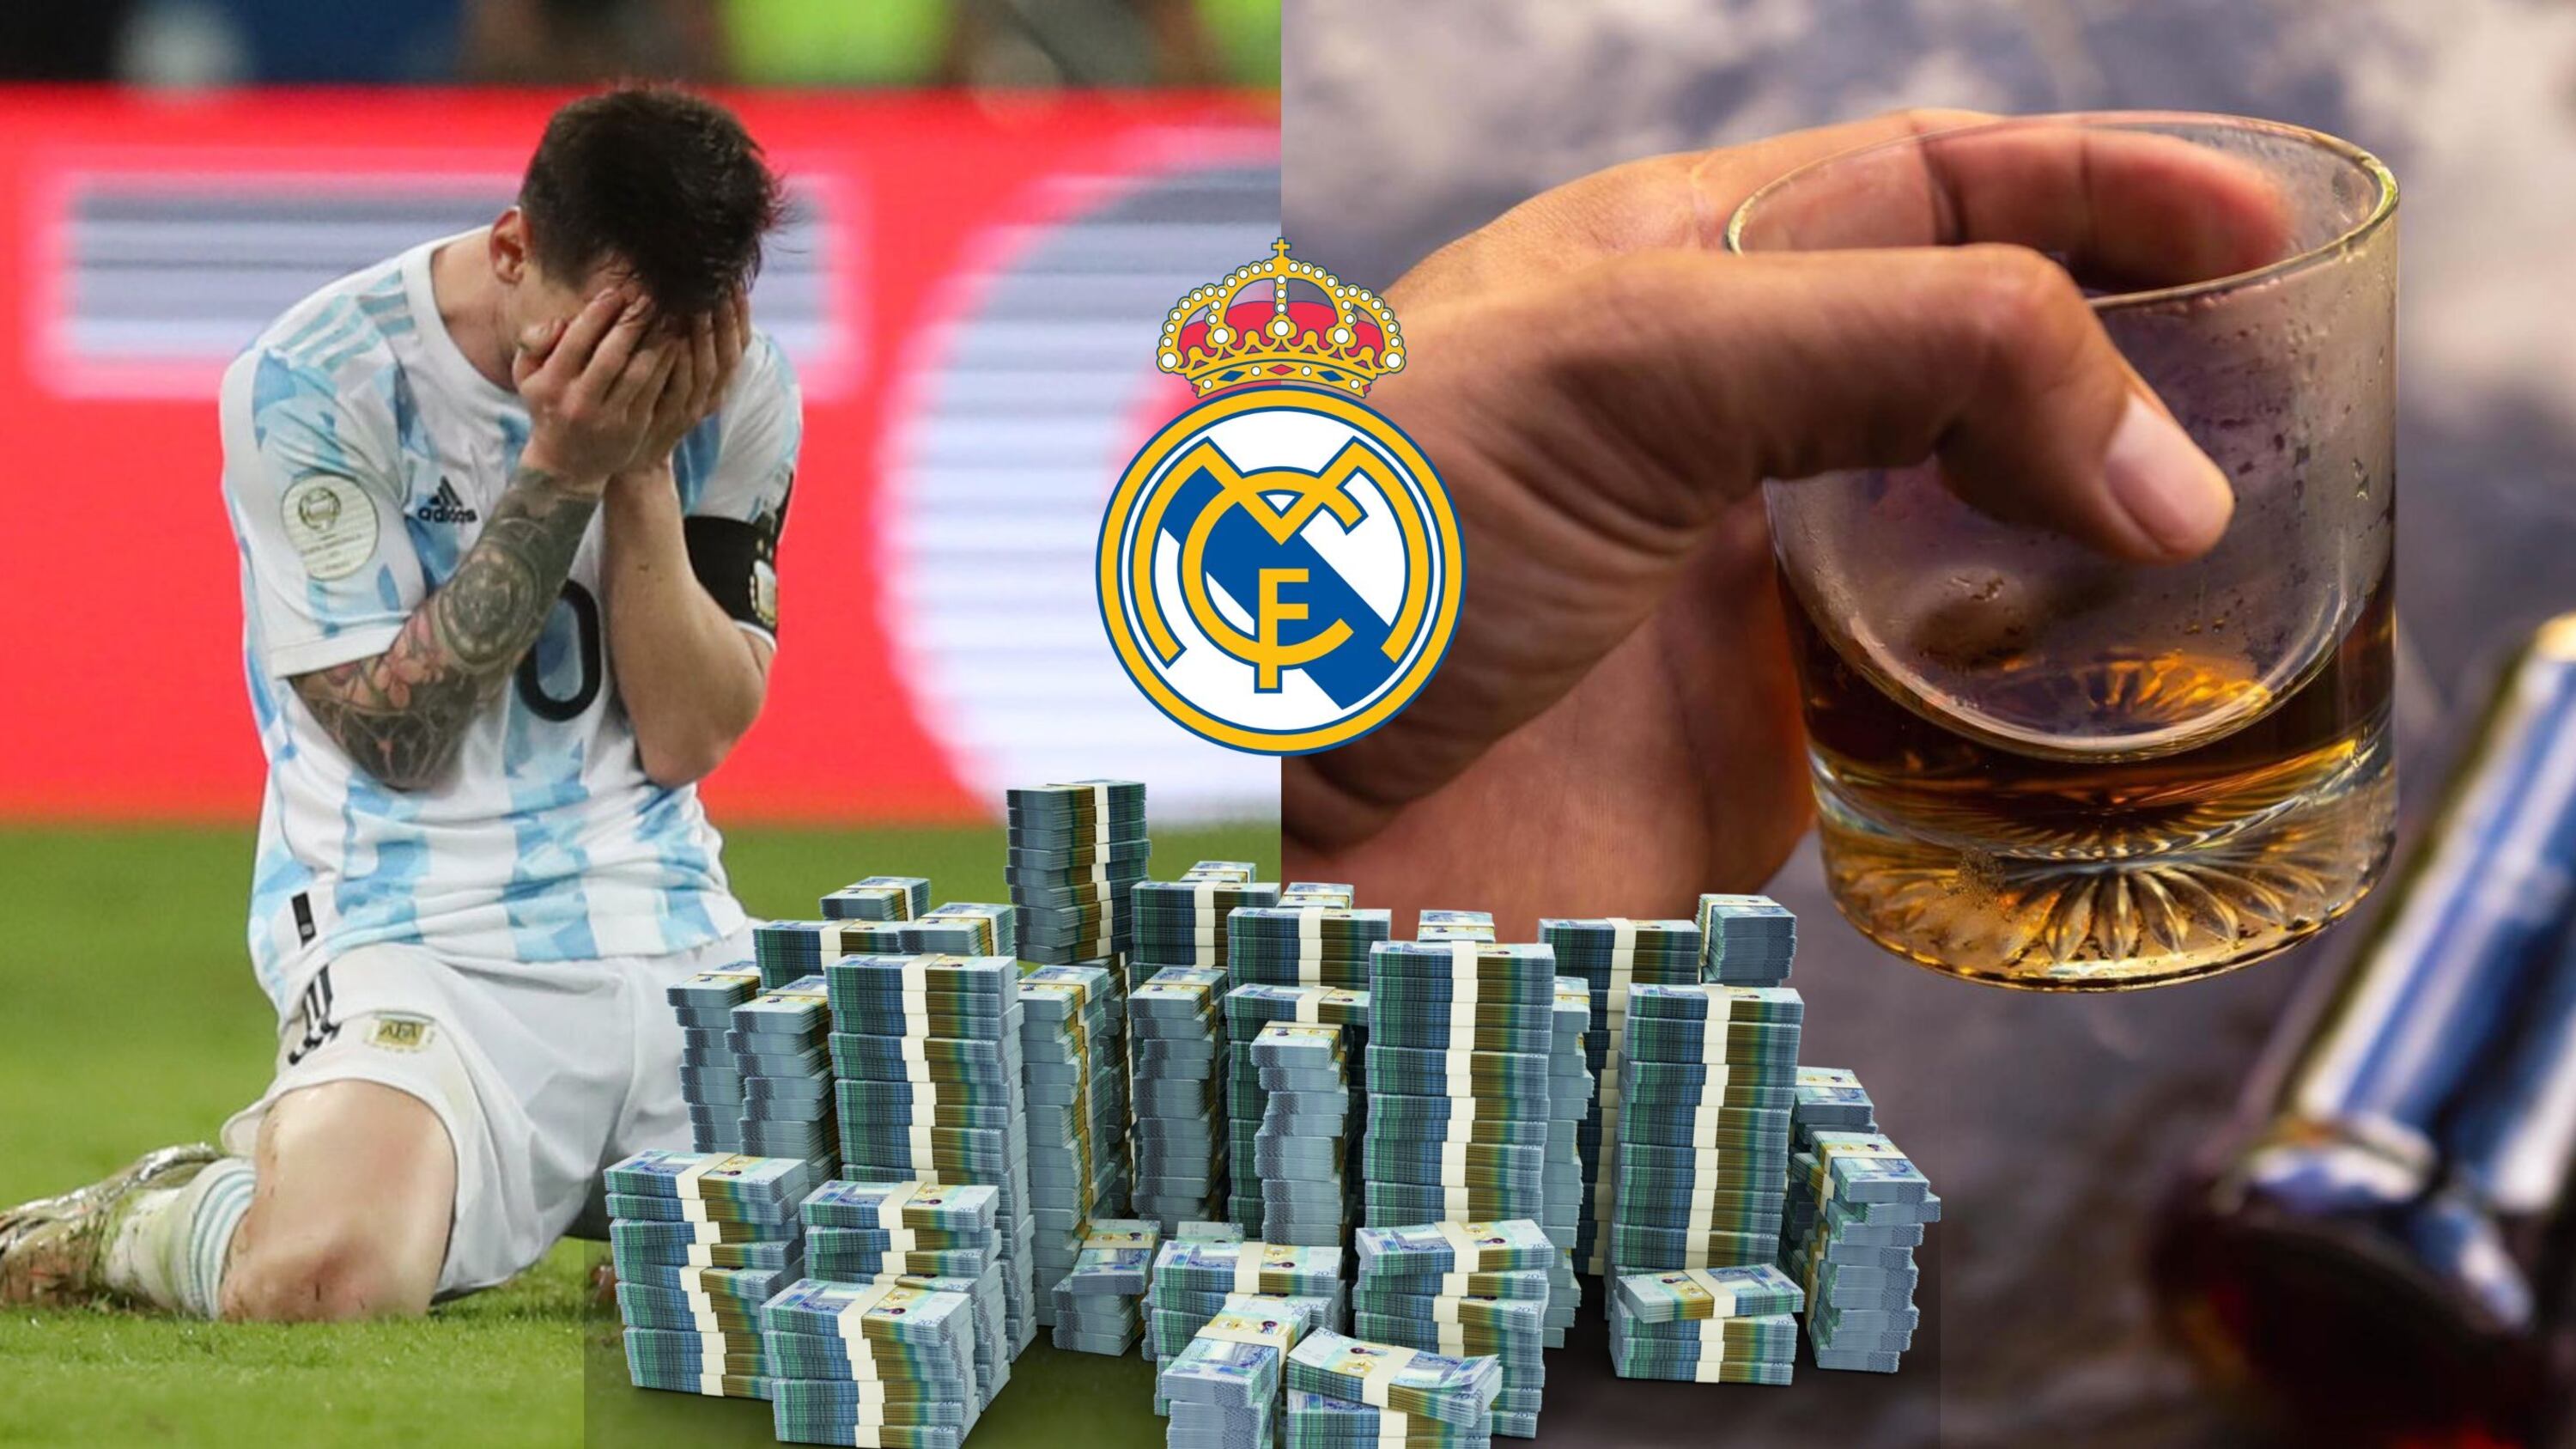 Hizo llorar a Messi y ganó 6 millones en el Real Madrid, ahora vende licor